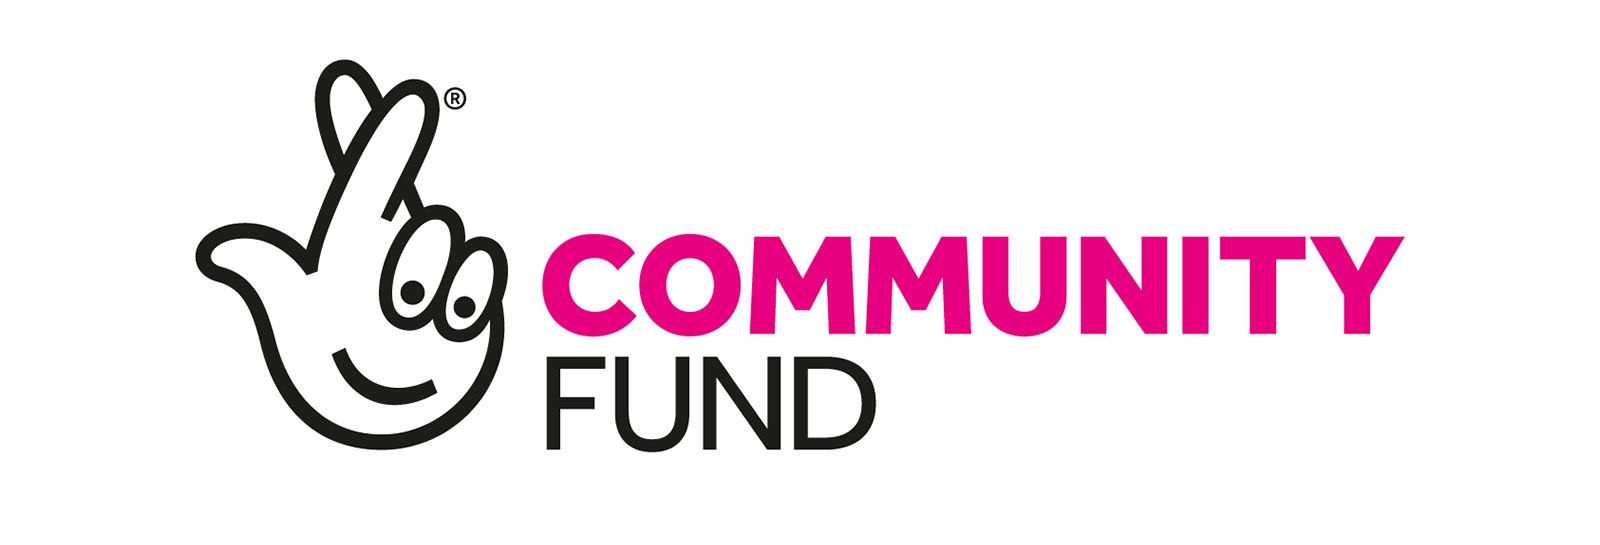 National Lottery Community Fund logo banner image